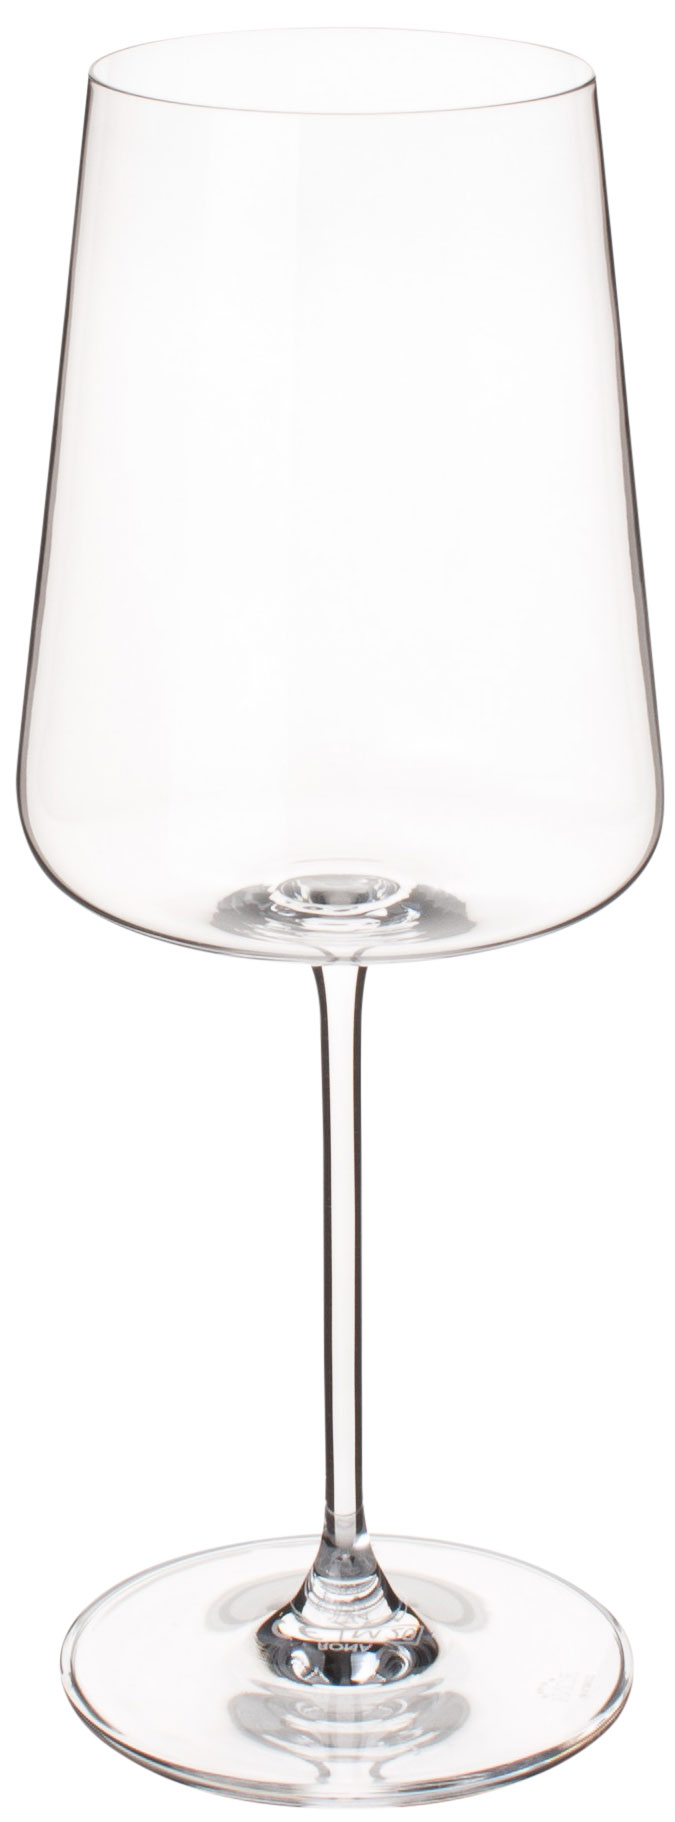 Bordeaux glass Mode, Rona - 680ml (1 pc.)